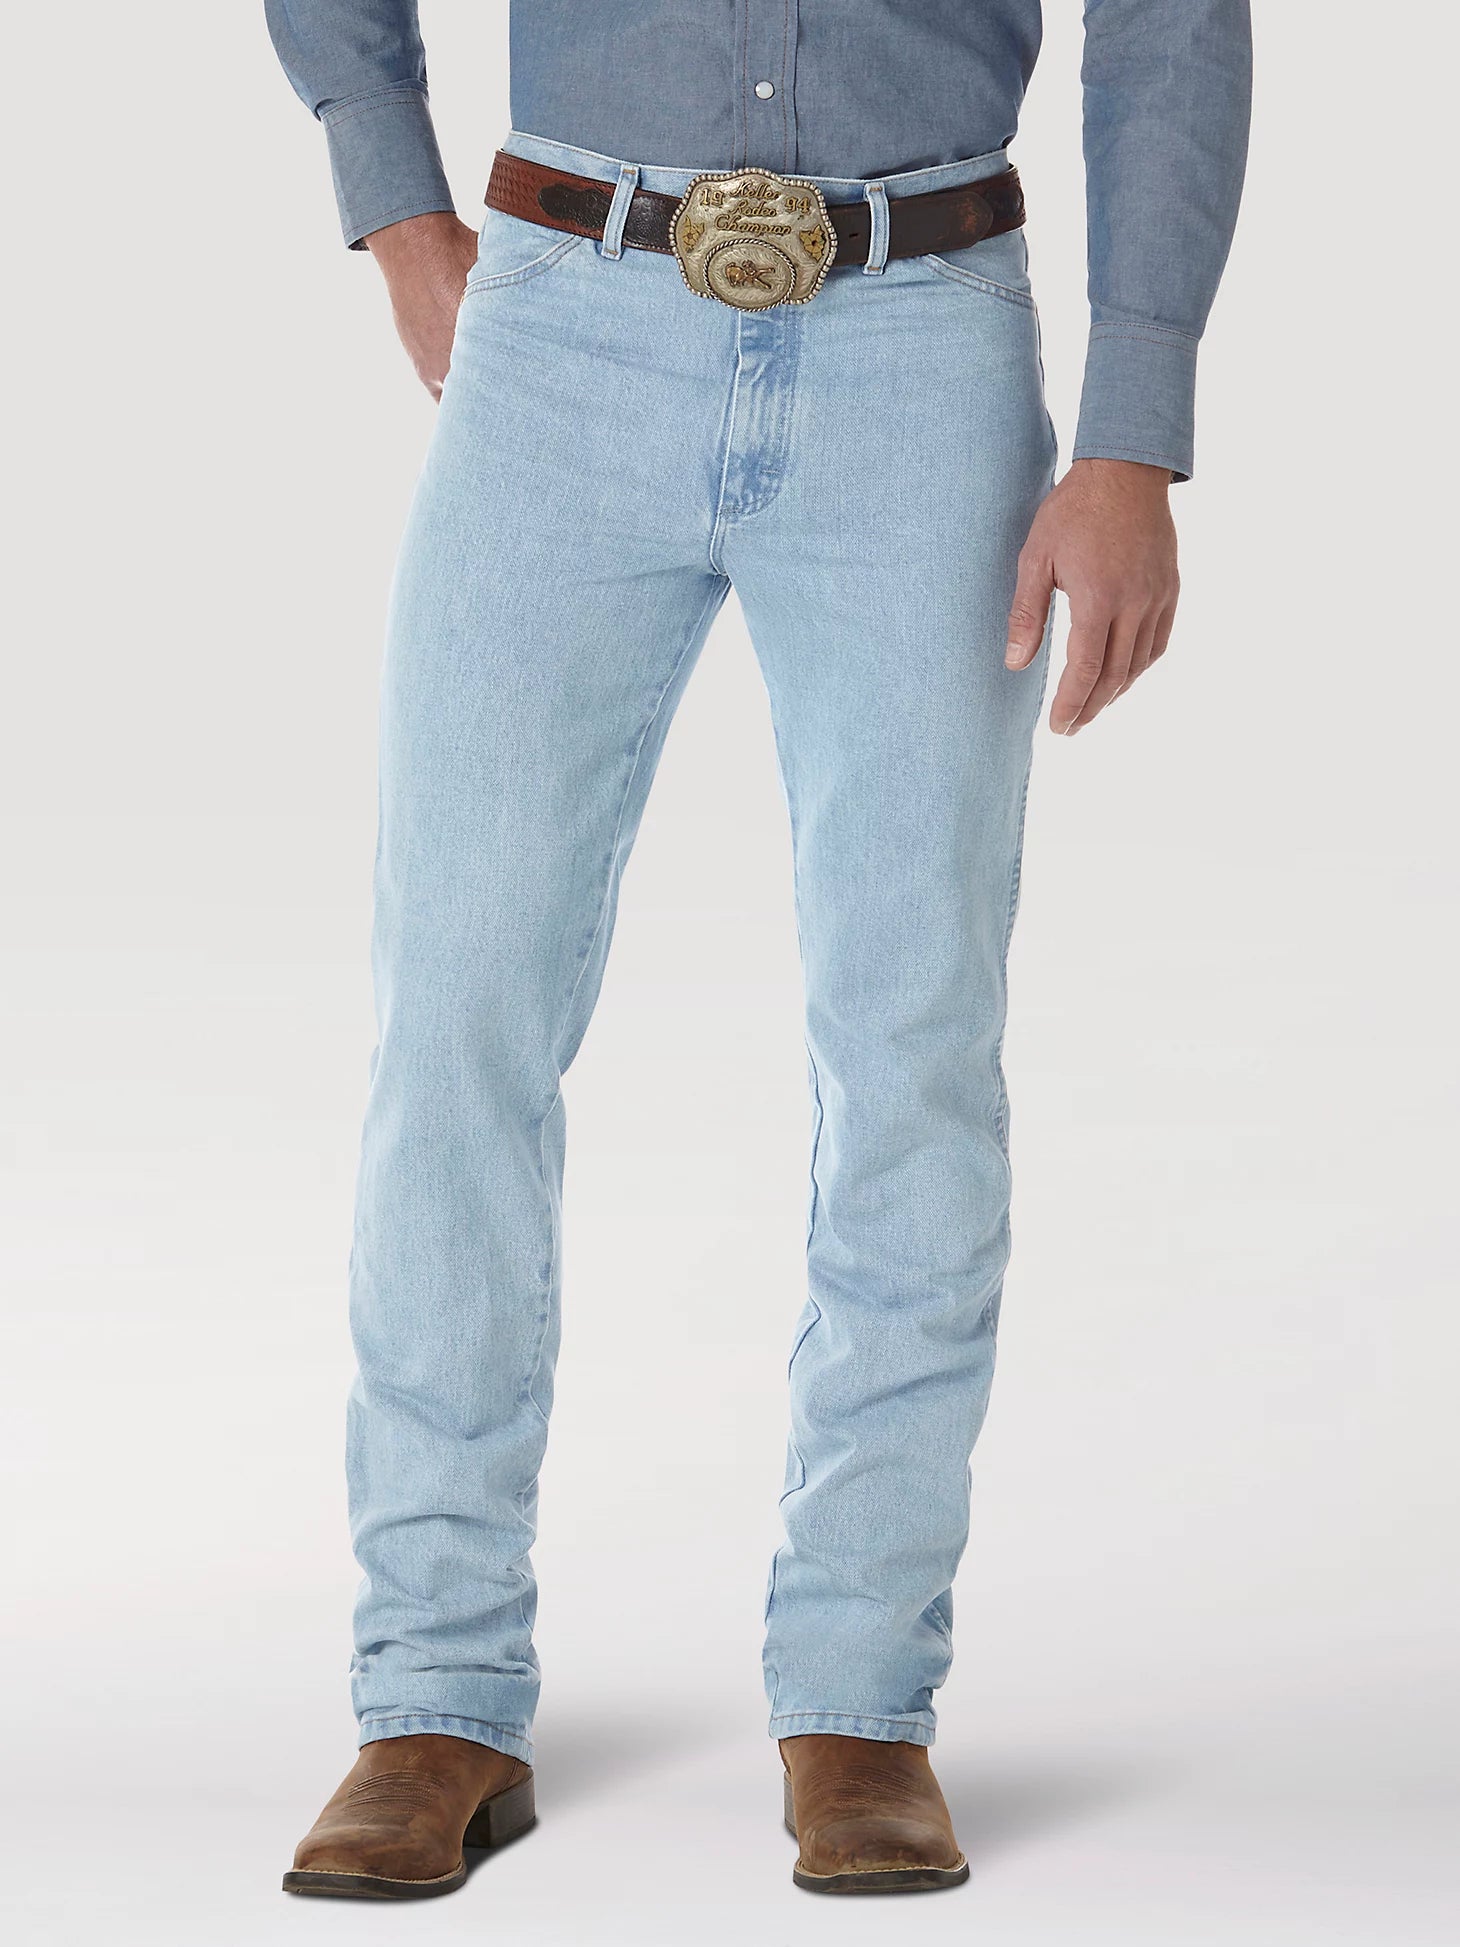 Men's Wrangler Slim Fit Cowboy Cut Jeans 936GBH